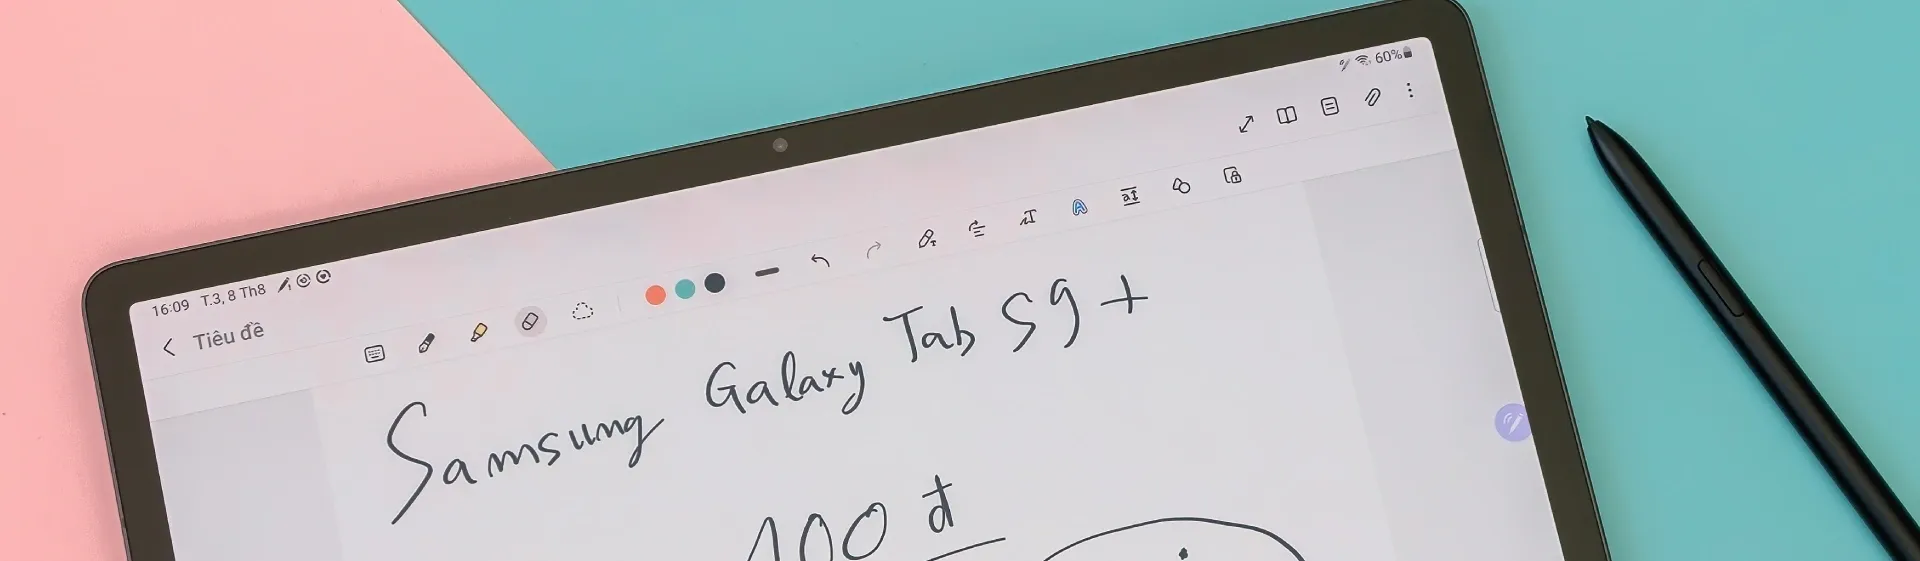 Galaxy Tab S9 vale a pena? Veja a ficha técnica do tablet da Samsung